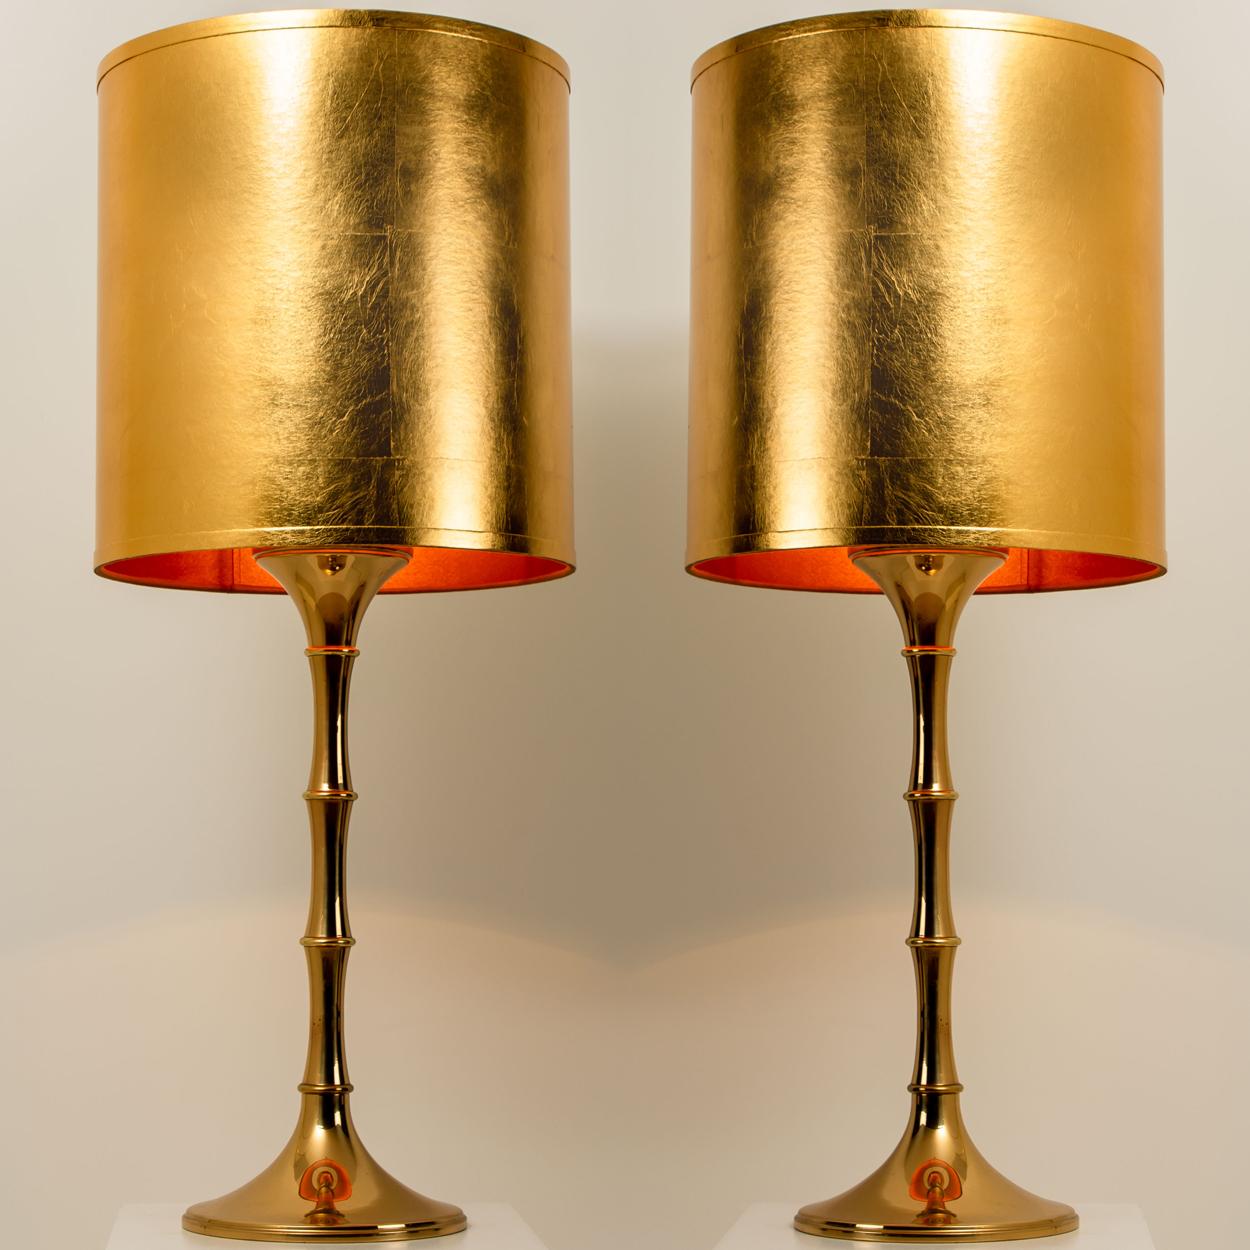 Brass Table Lamps Model 'ML 1', Designed by Ingo Maurer, 1968 for Design M